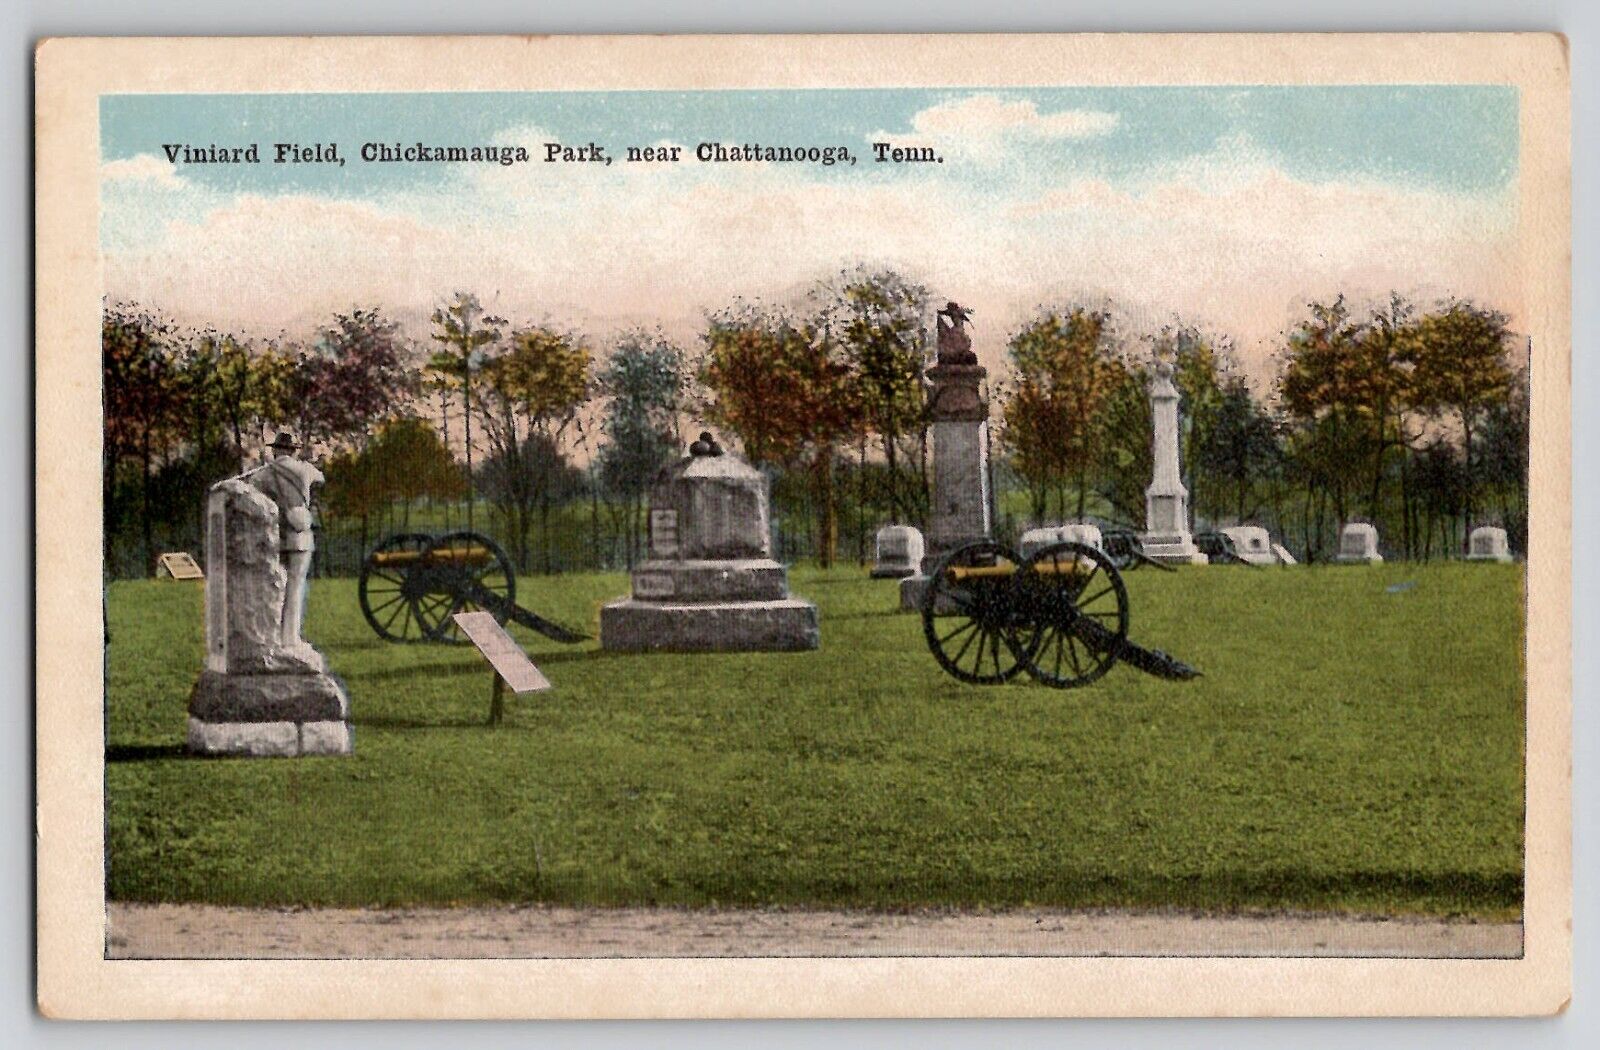 Viniard Field Chickamauga Park Chattanooga TN Postcard Civil War Monuments 1920s